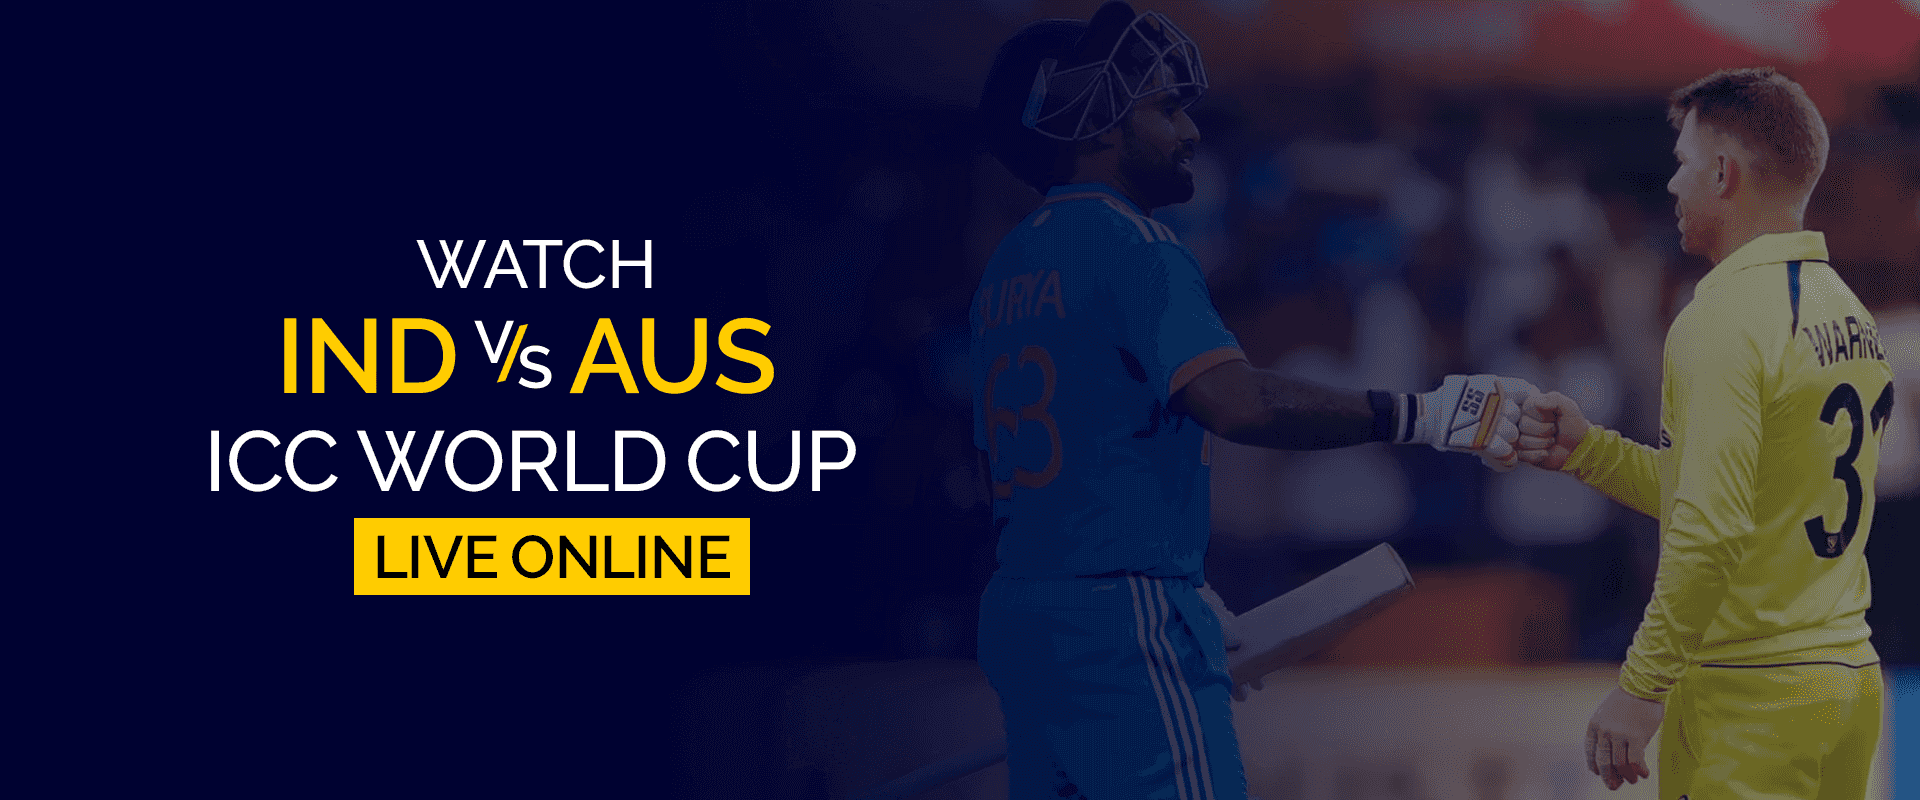 Watch IND vs AUS ICC World Cup Live Online